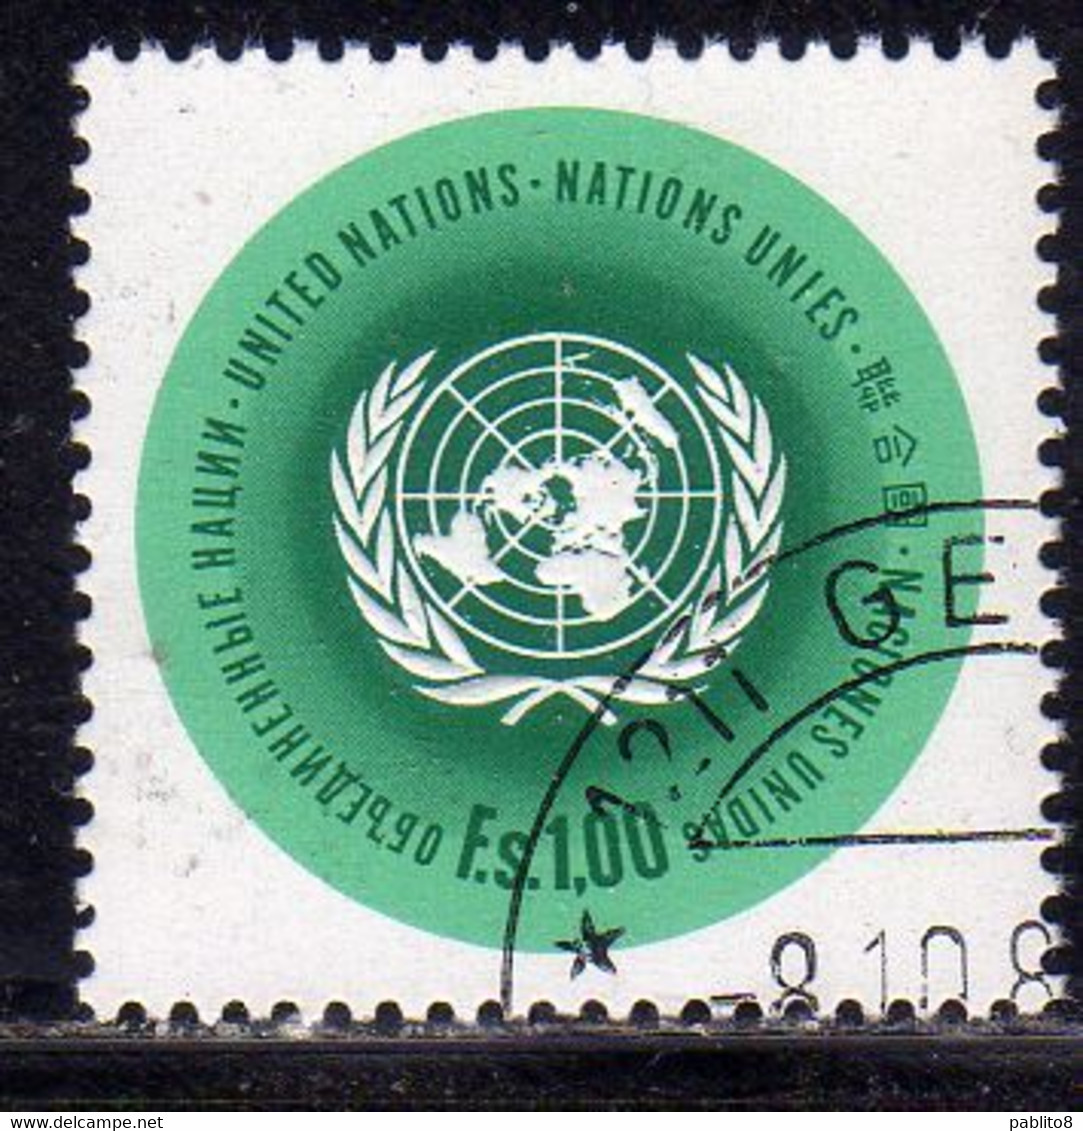 UNITED NATIONS GENEVE GINEVRA GENEVA SVIZZERA ONU UN UNO 1969 1970 EMBLEM EMBLEMA 1.00fr USED OBLITERE' - Oblitérés